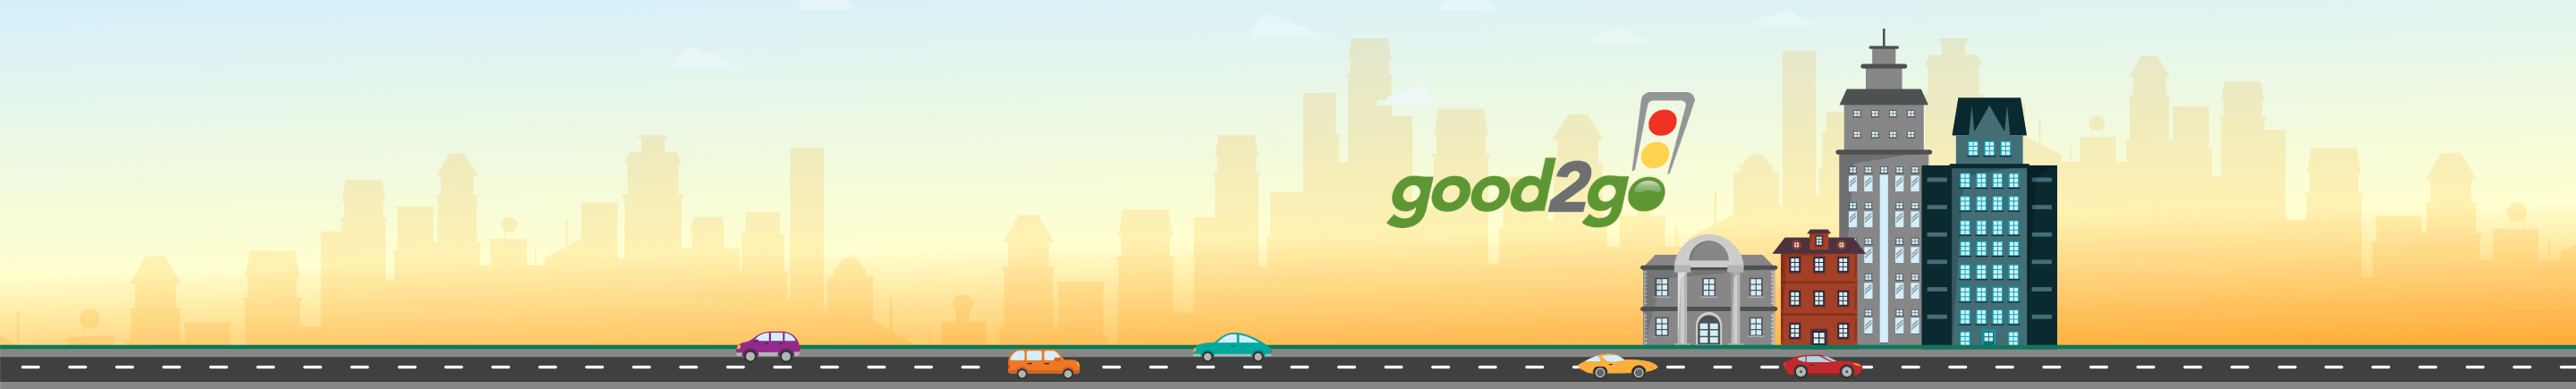 Good2go logo over a sunset city